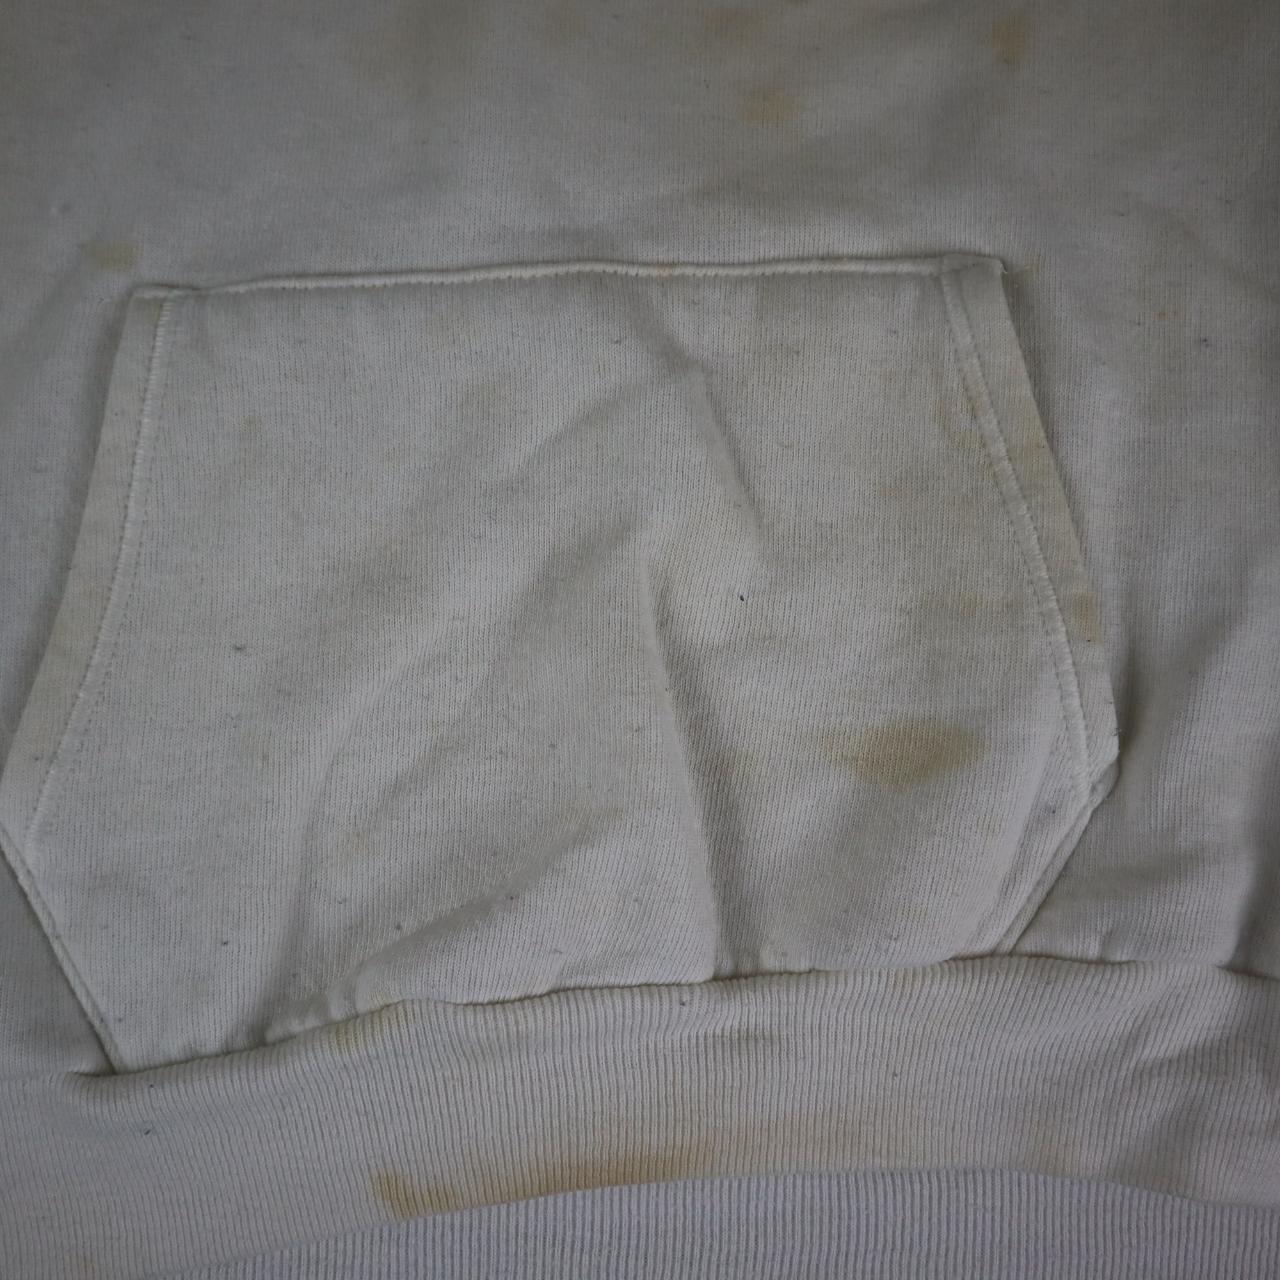 Product Image 2 - Vintage Muskingum College hoodie

SIZE: L

MEASUREMENTS

WIDTH: